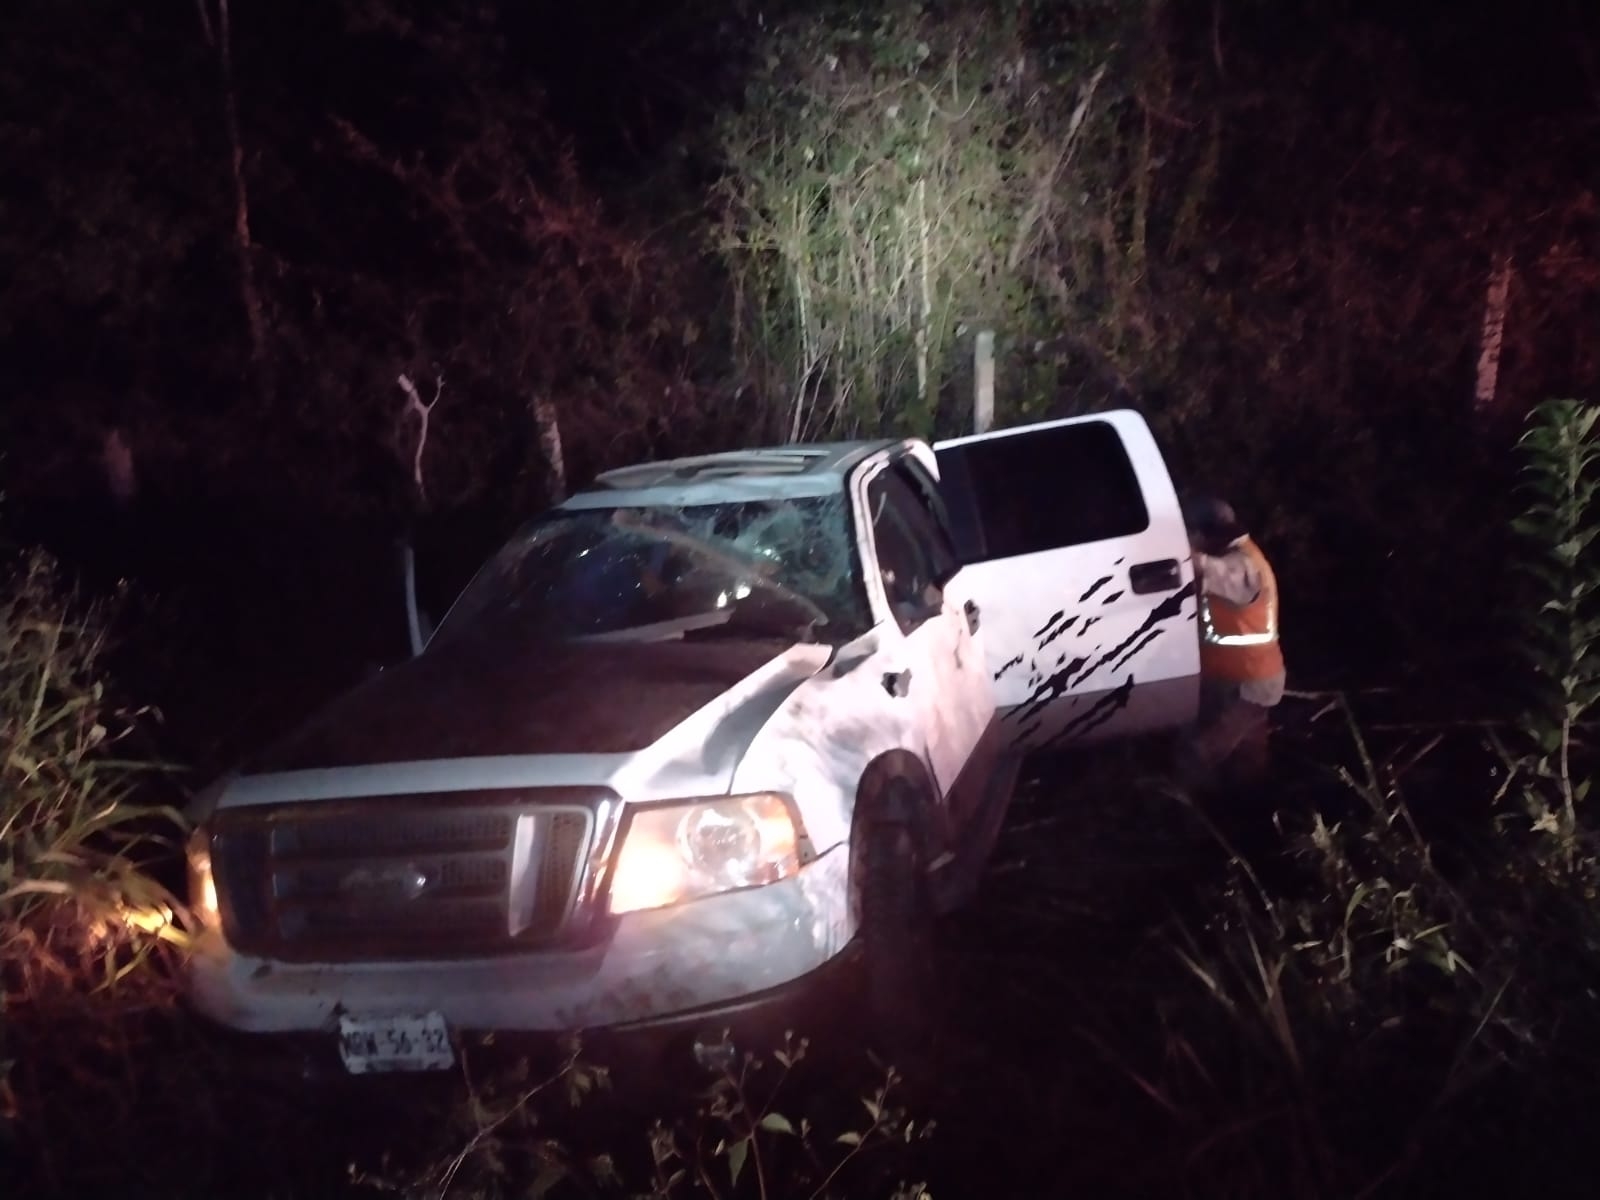 Camioneta cargada de caña termina volcada en el tramo Tulum-Felipe Carrillo Puerto